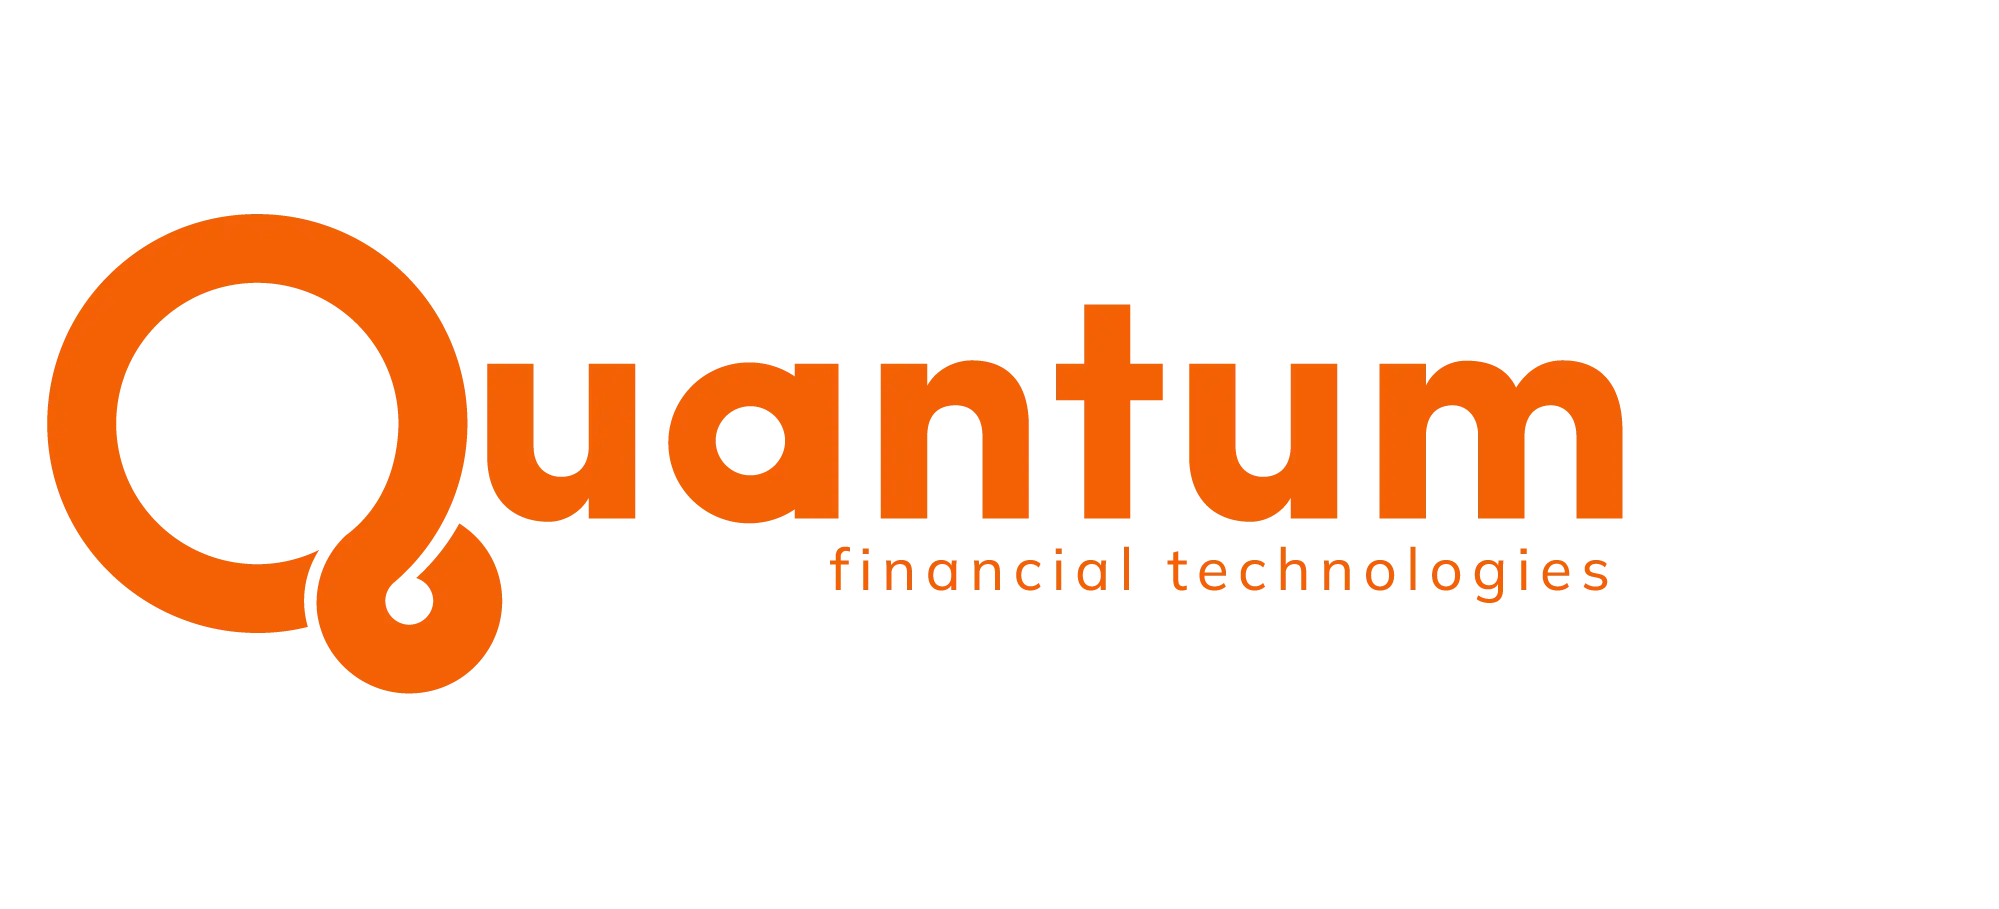 Quantum Financial Technologies' logo